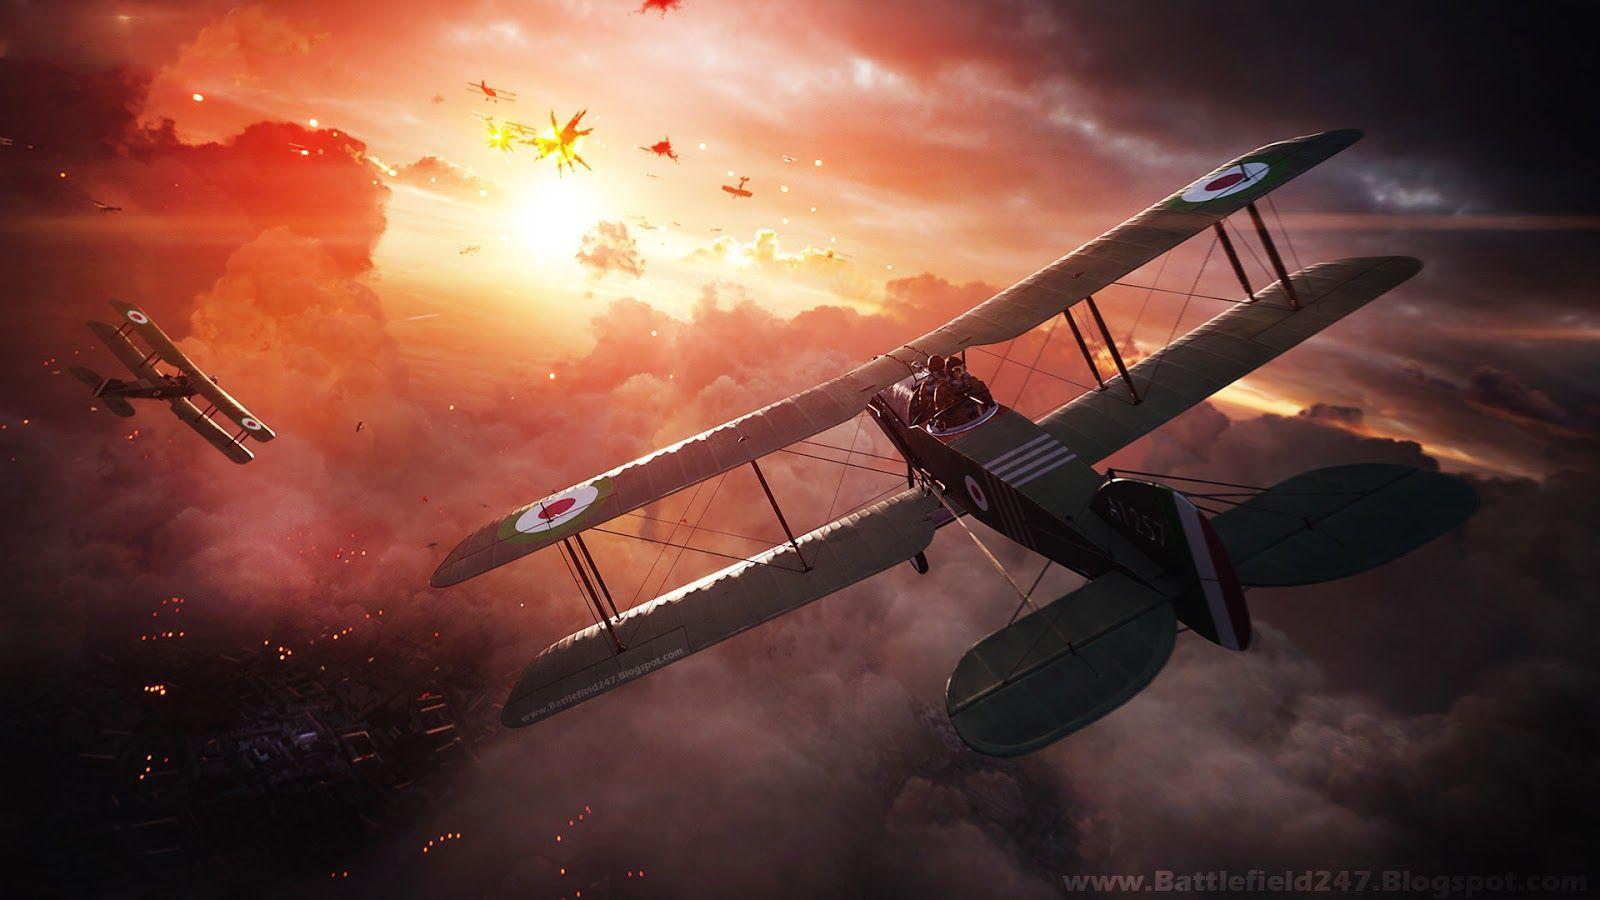 ✪ Battlefield 247 ✪: ✪ [BF1 Wallpaper] Sunset Biplane Dogfights ✪